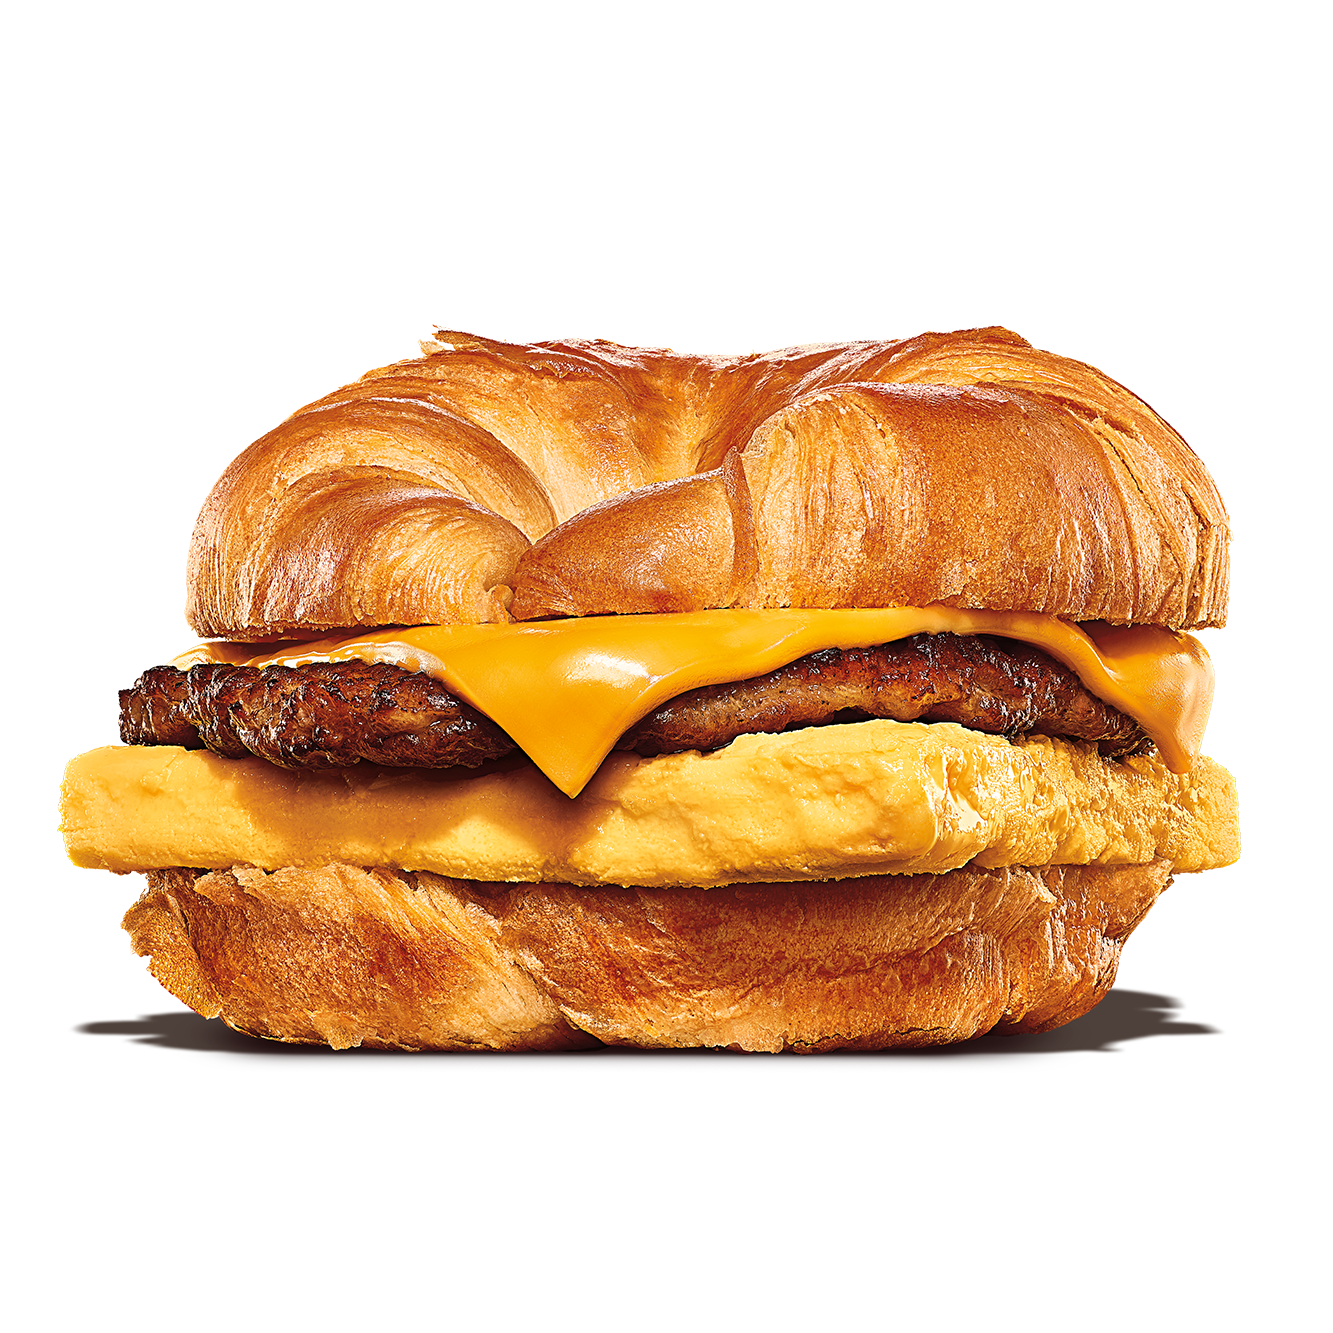 Burger King Jackson (731)422-9957